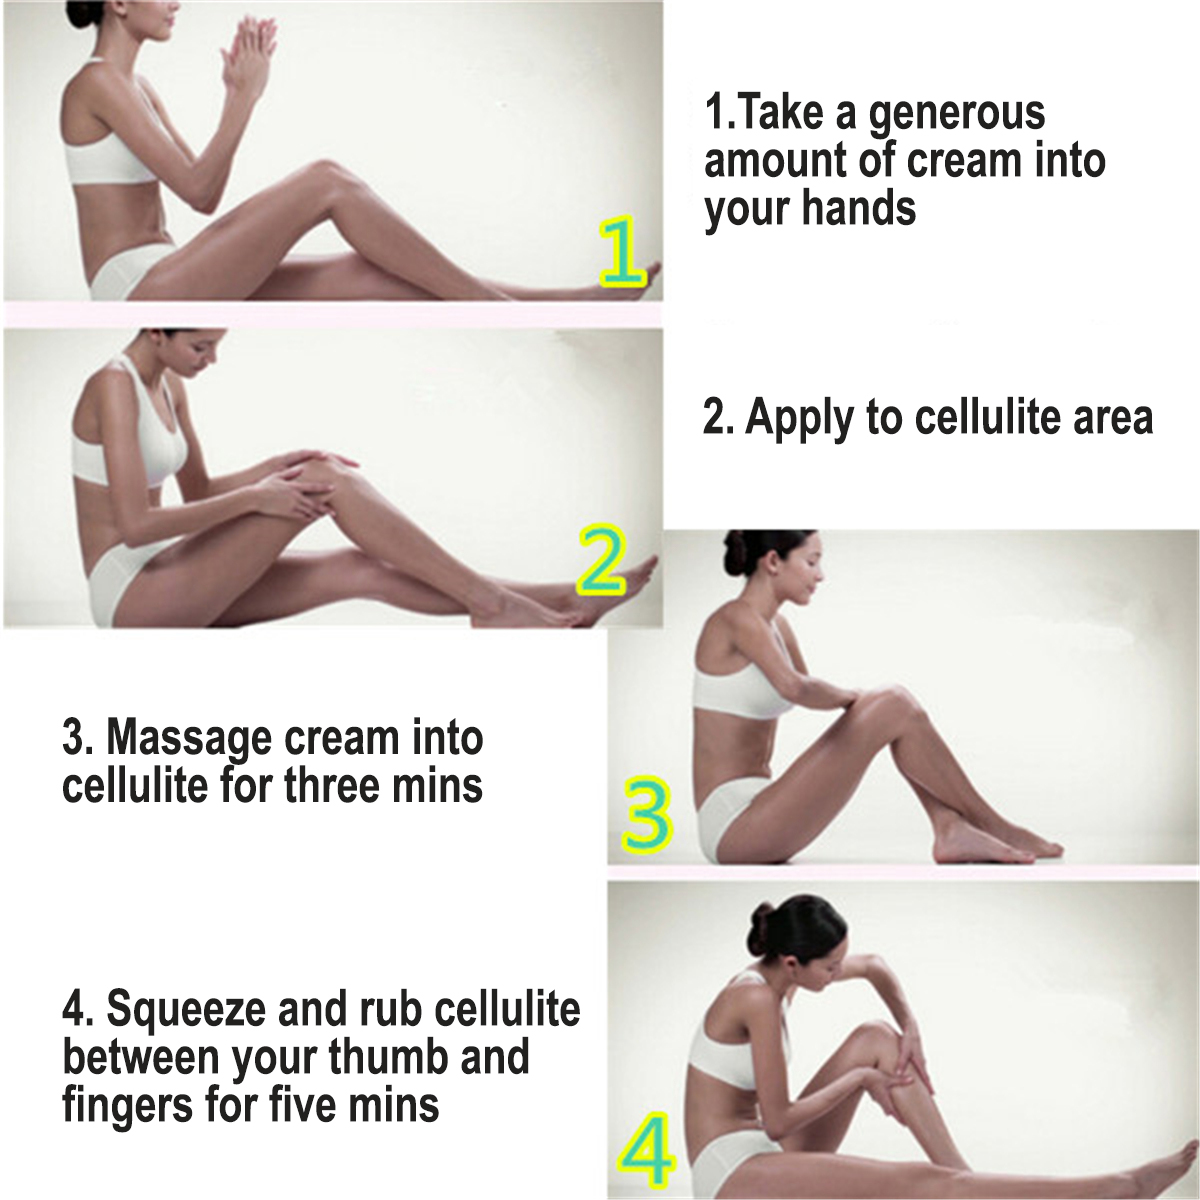 Cellulite massage